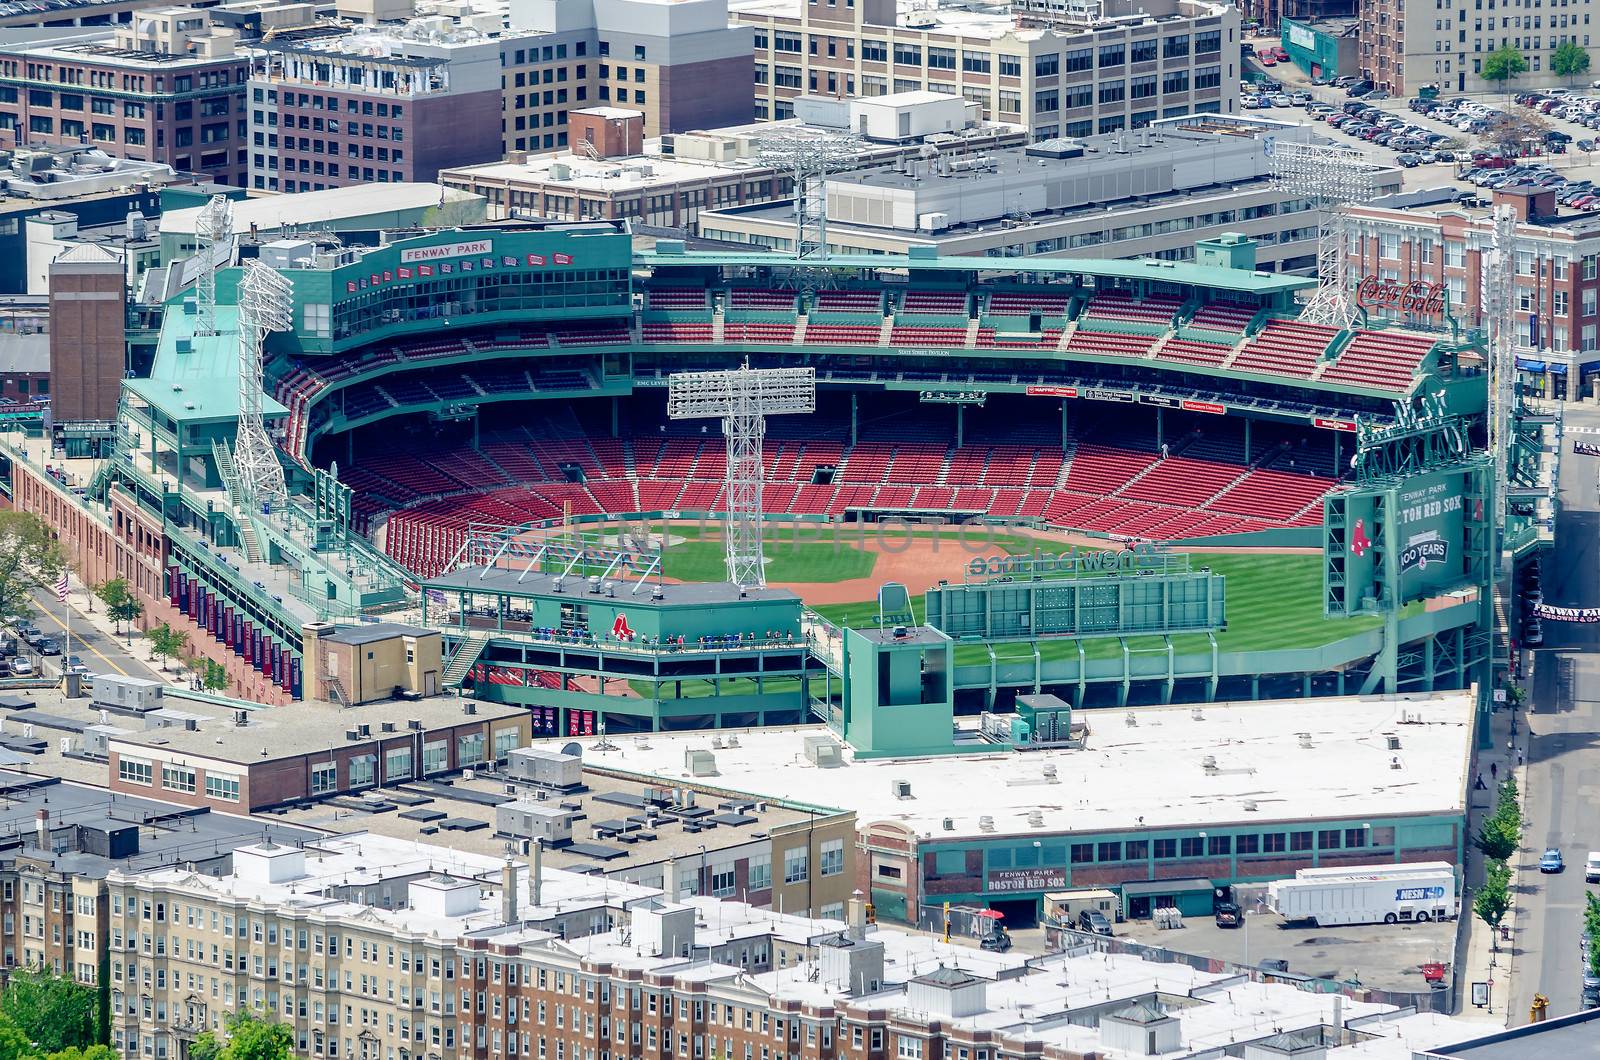 Aerial View of Fenway Park, Boston by marcorubino